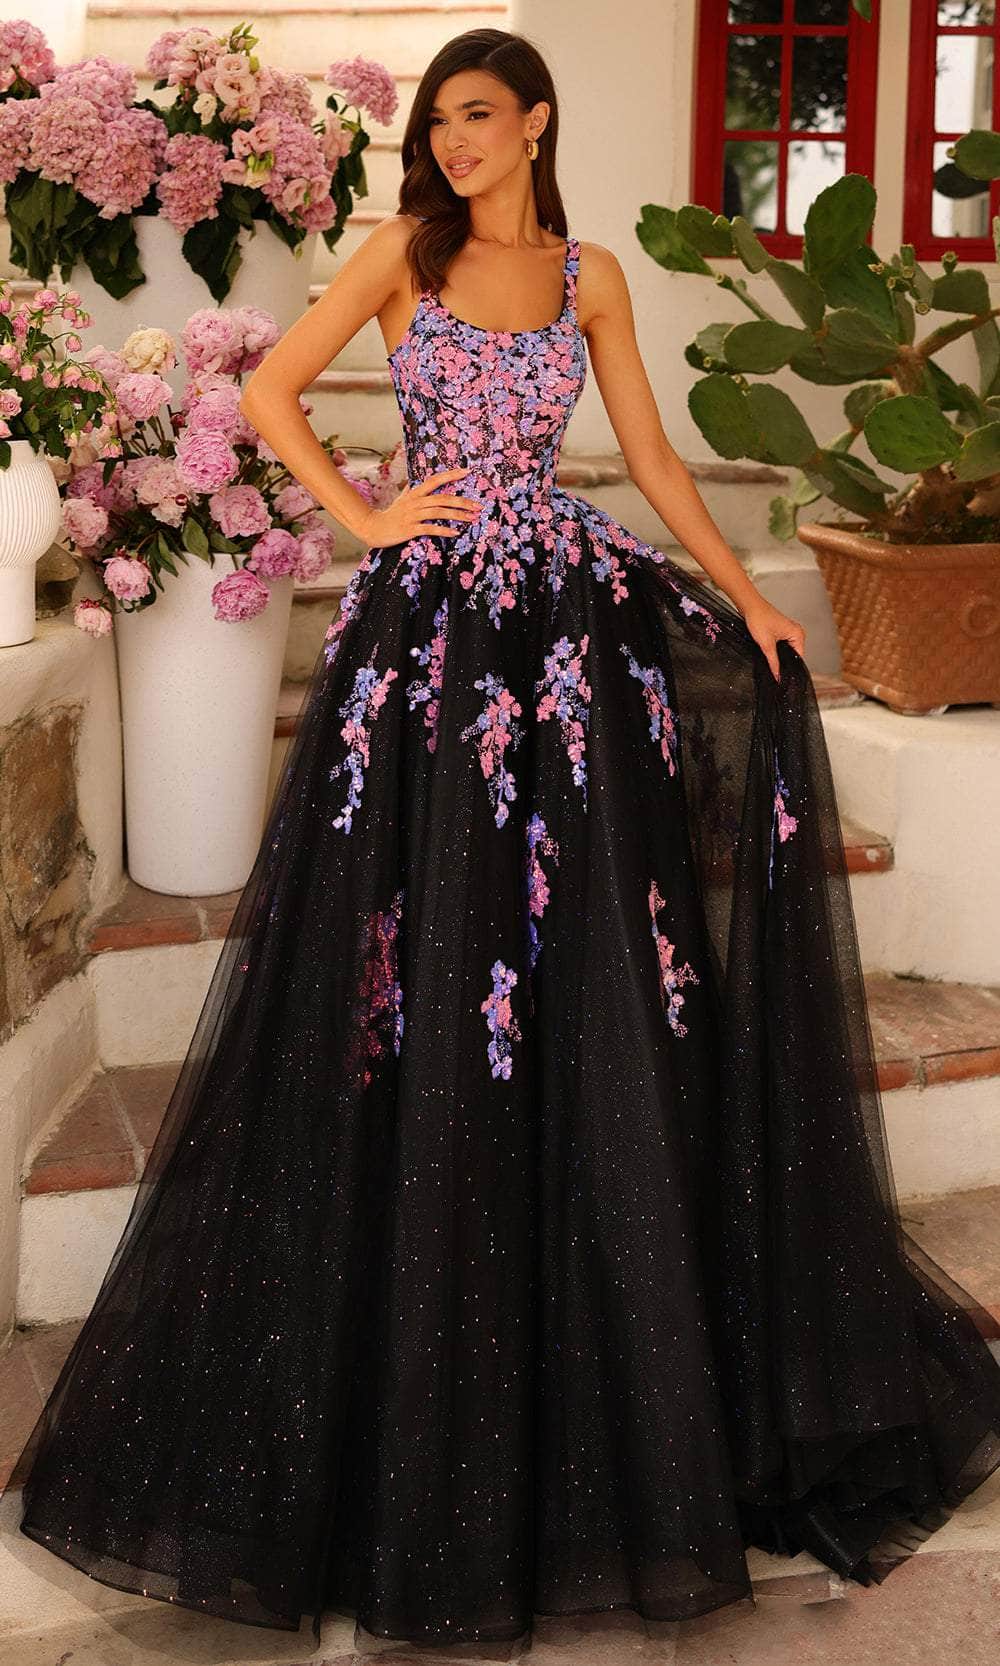 Amarra 88767 - Sequined Floral Prom Dress 000 / Black/Multi